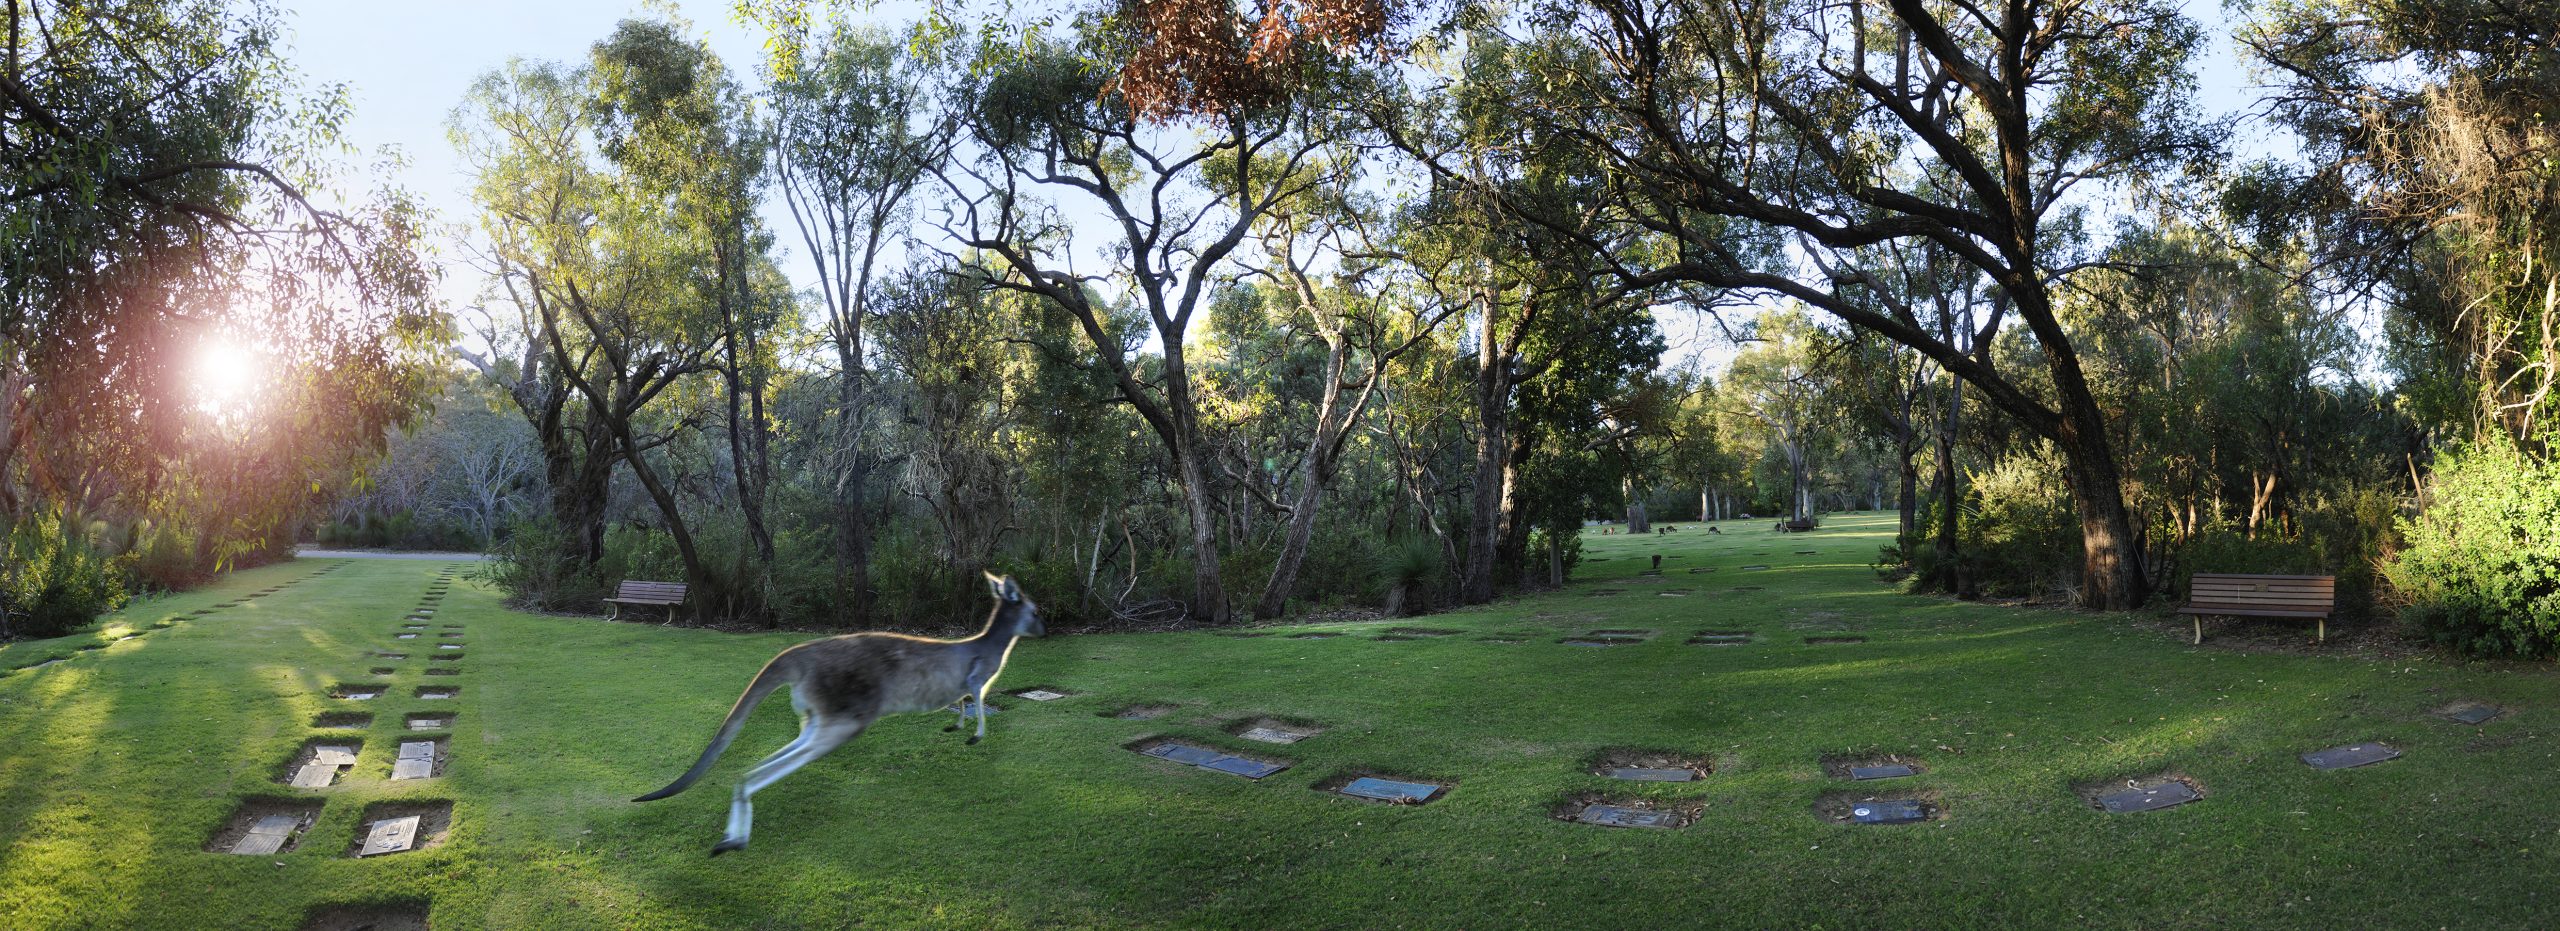 kangaroo bounding across burial plaques in Tuart Court near sunrise at Pinnaroo Valley Memorial Park